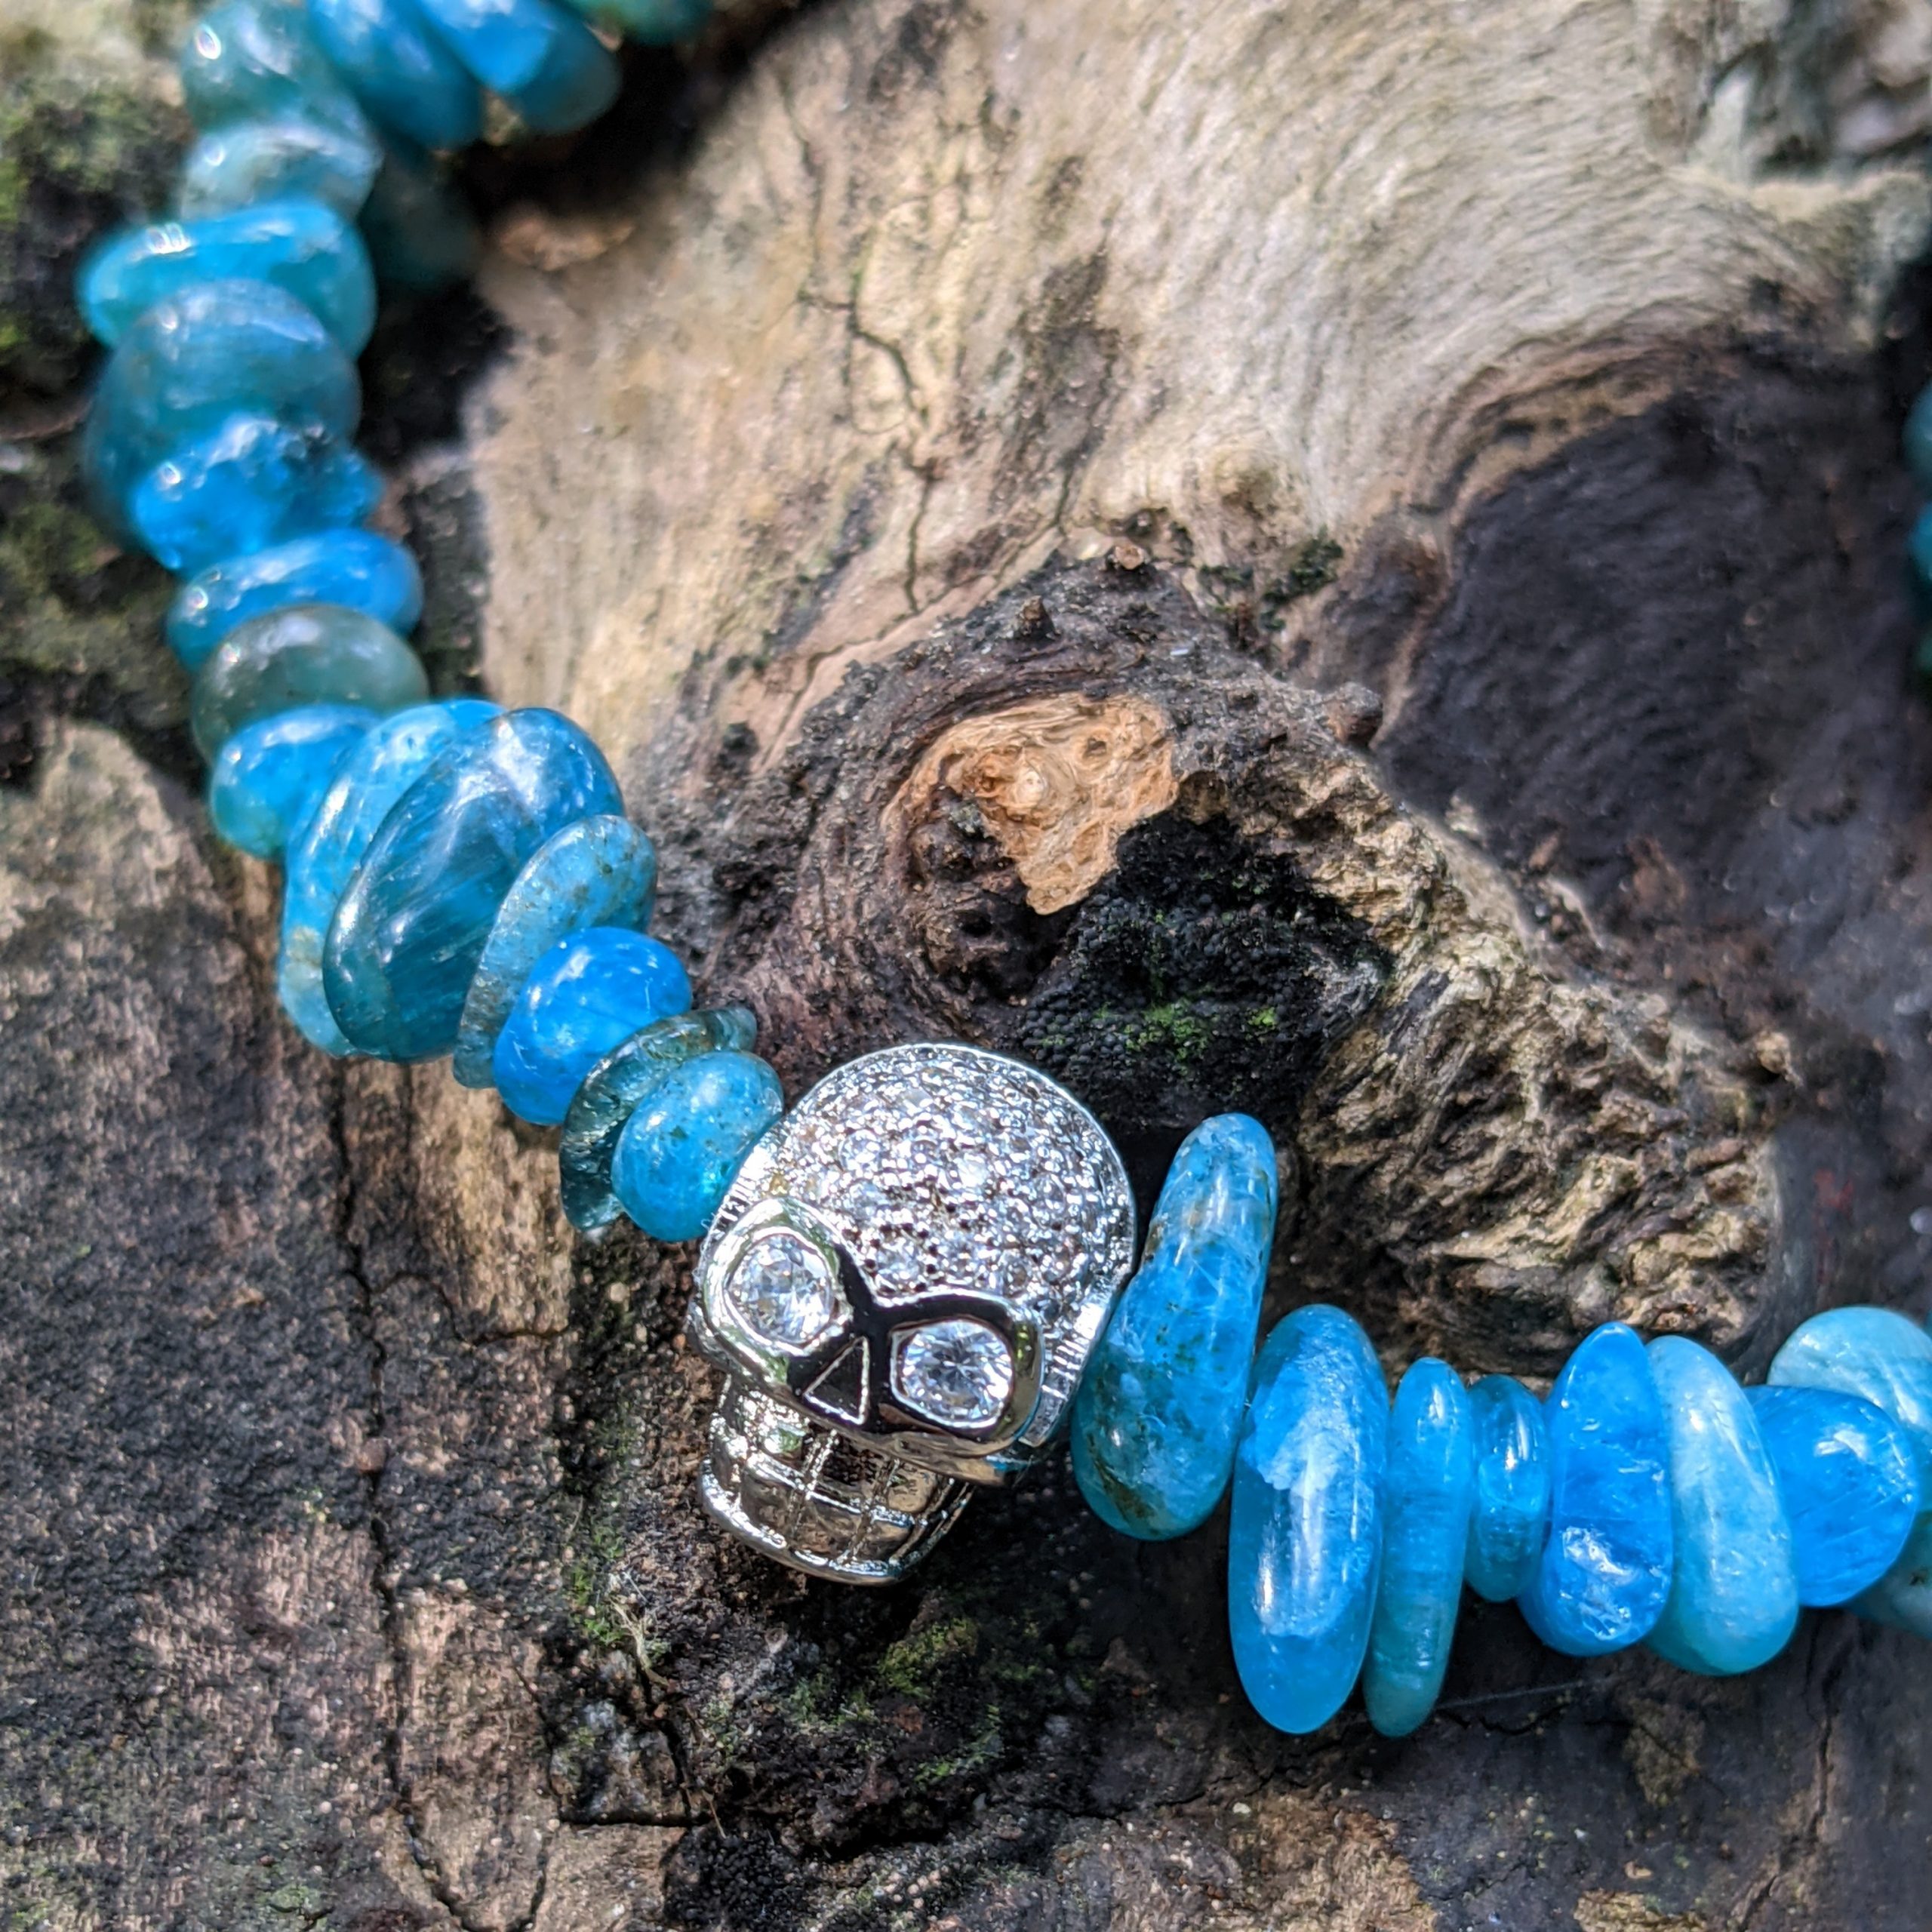 stretchy-silver-skull-blue-apatite-stone-mens-beaded-bracelet